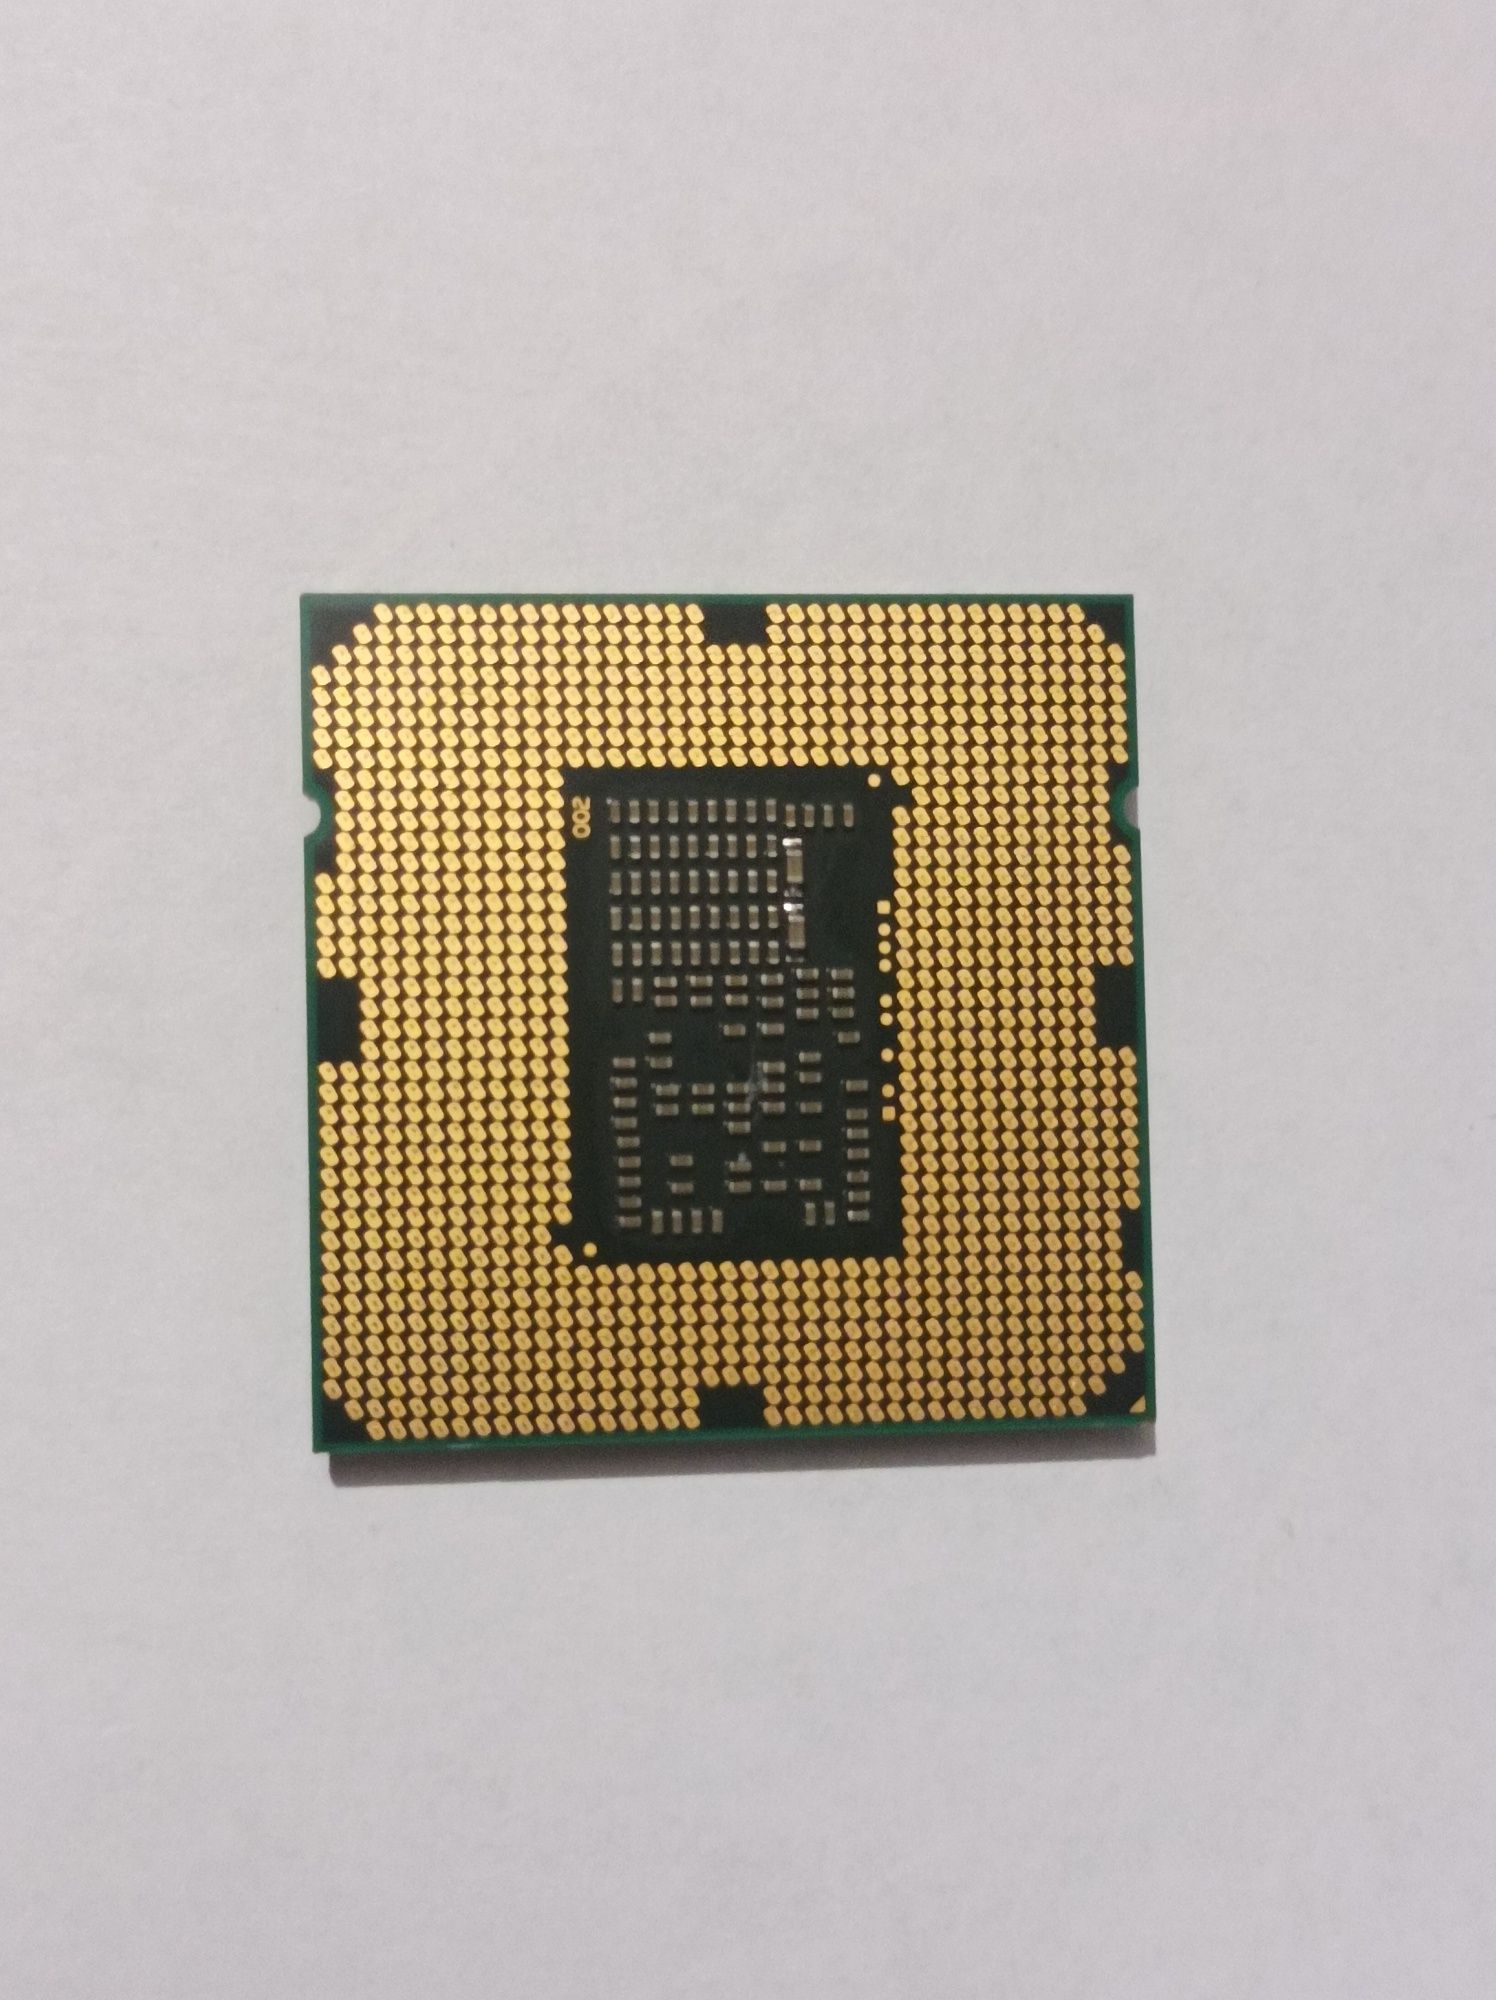 Procesor Intel core I5-650